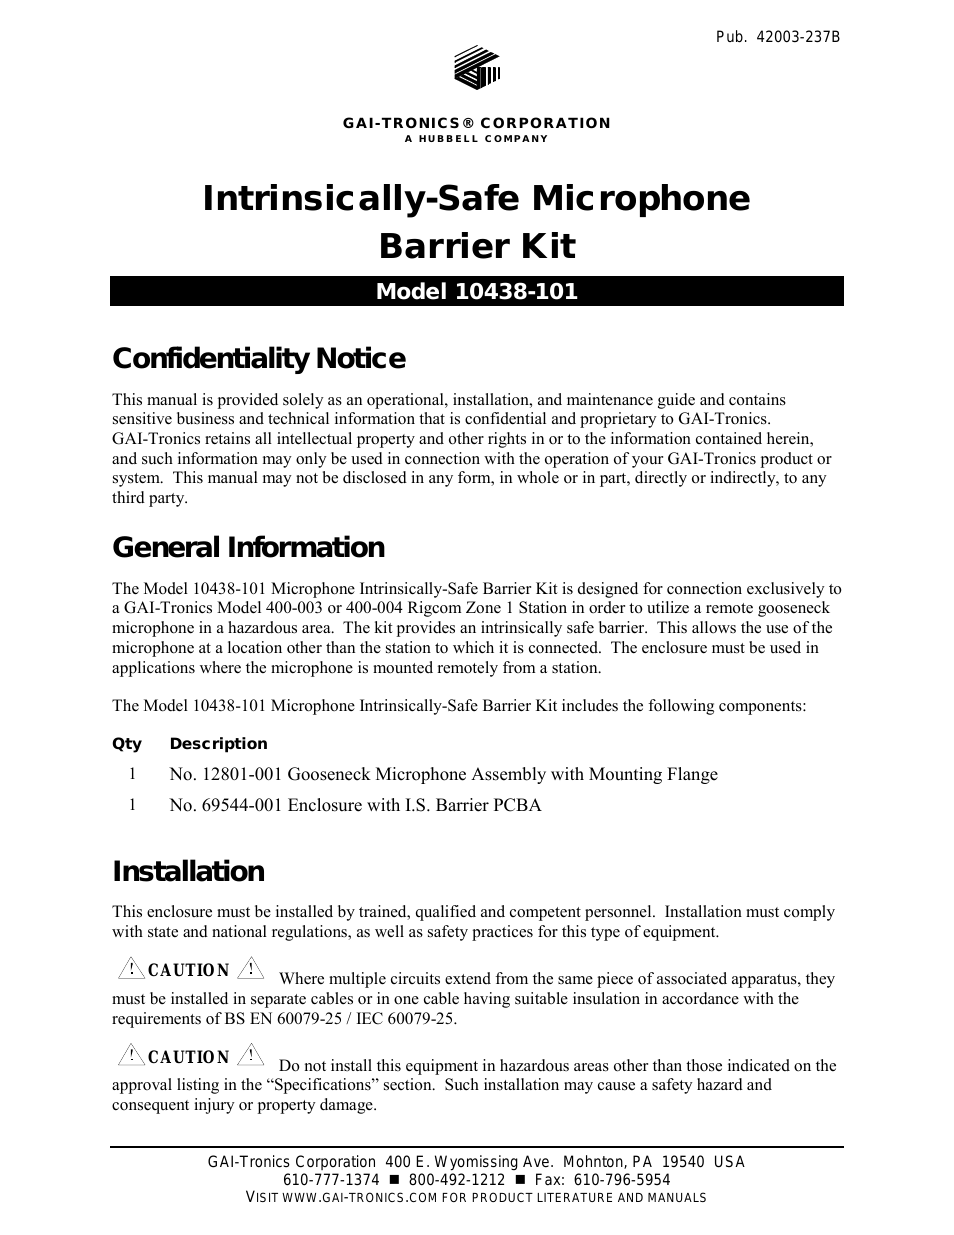 10438-101 Intrinsically-Safe Microphone Barrier Kit